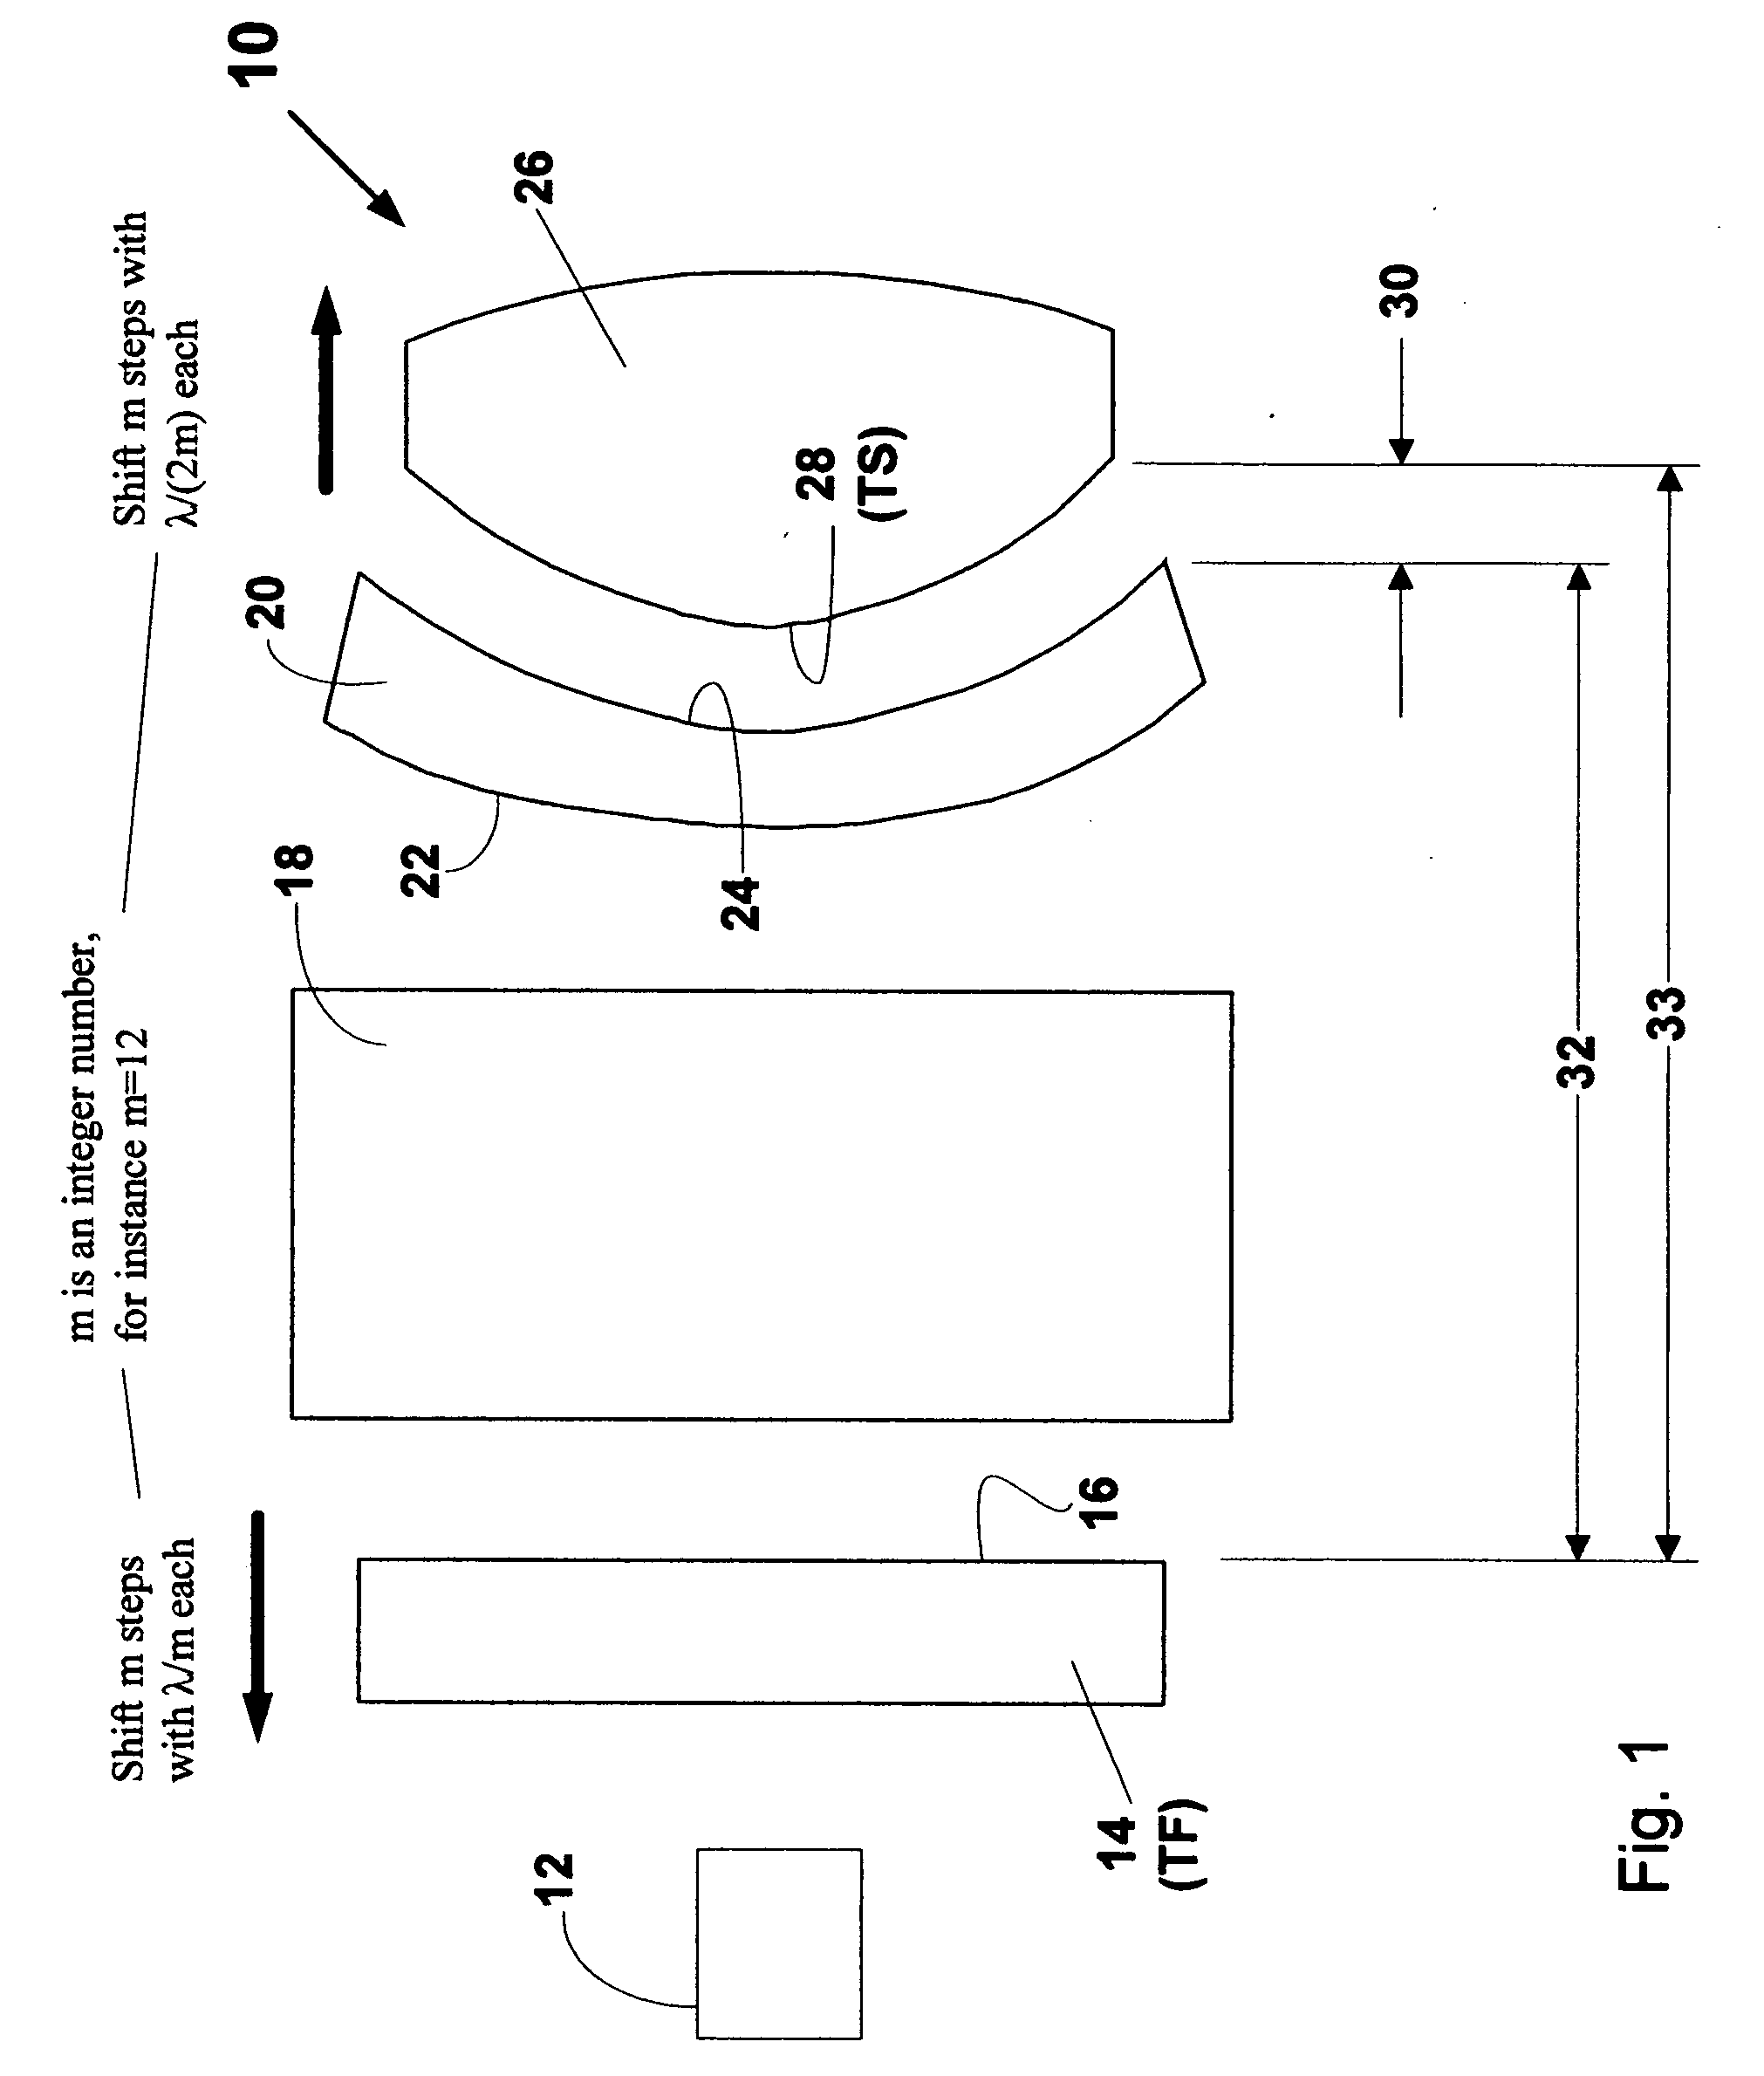 Reconfigurable interferometer system